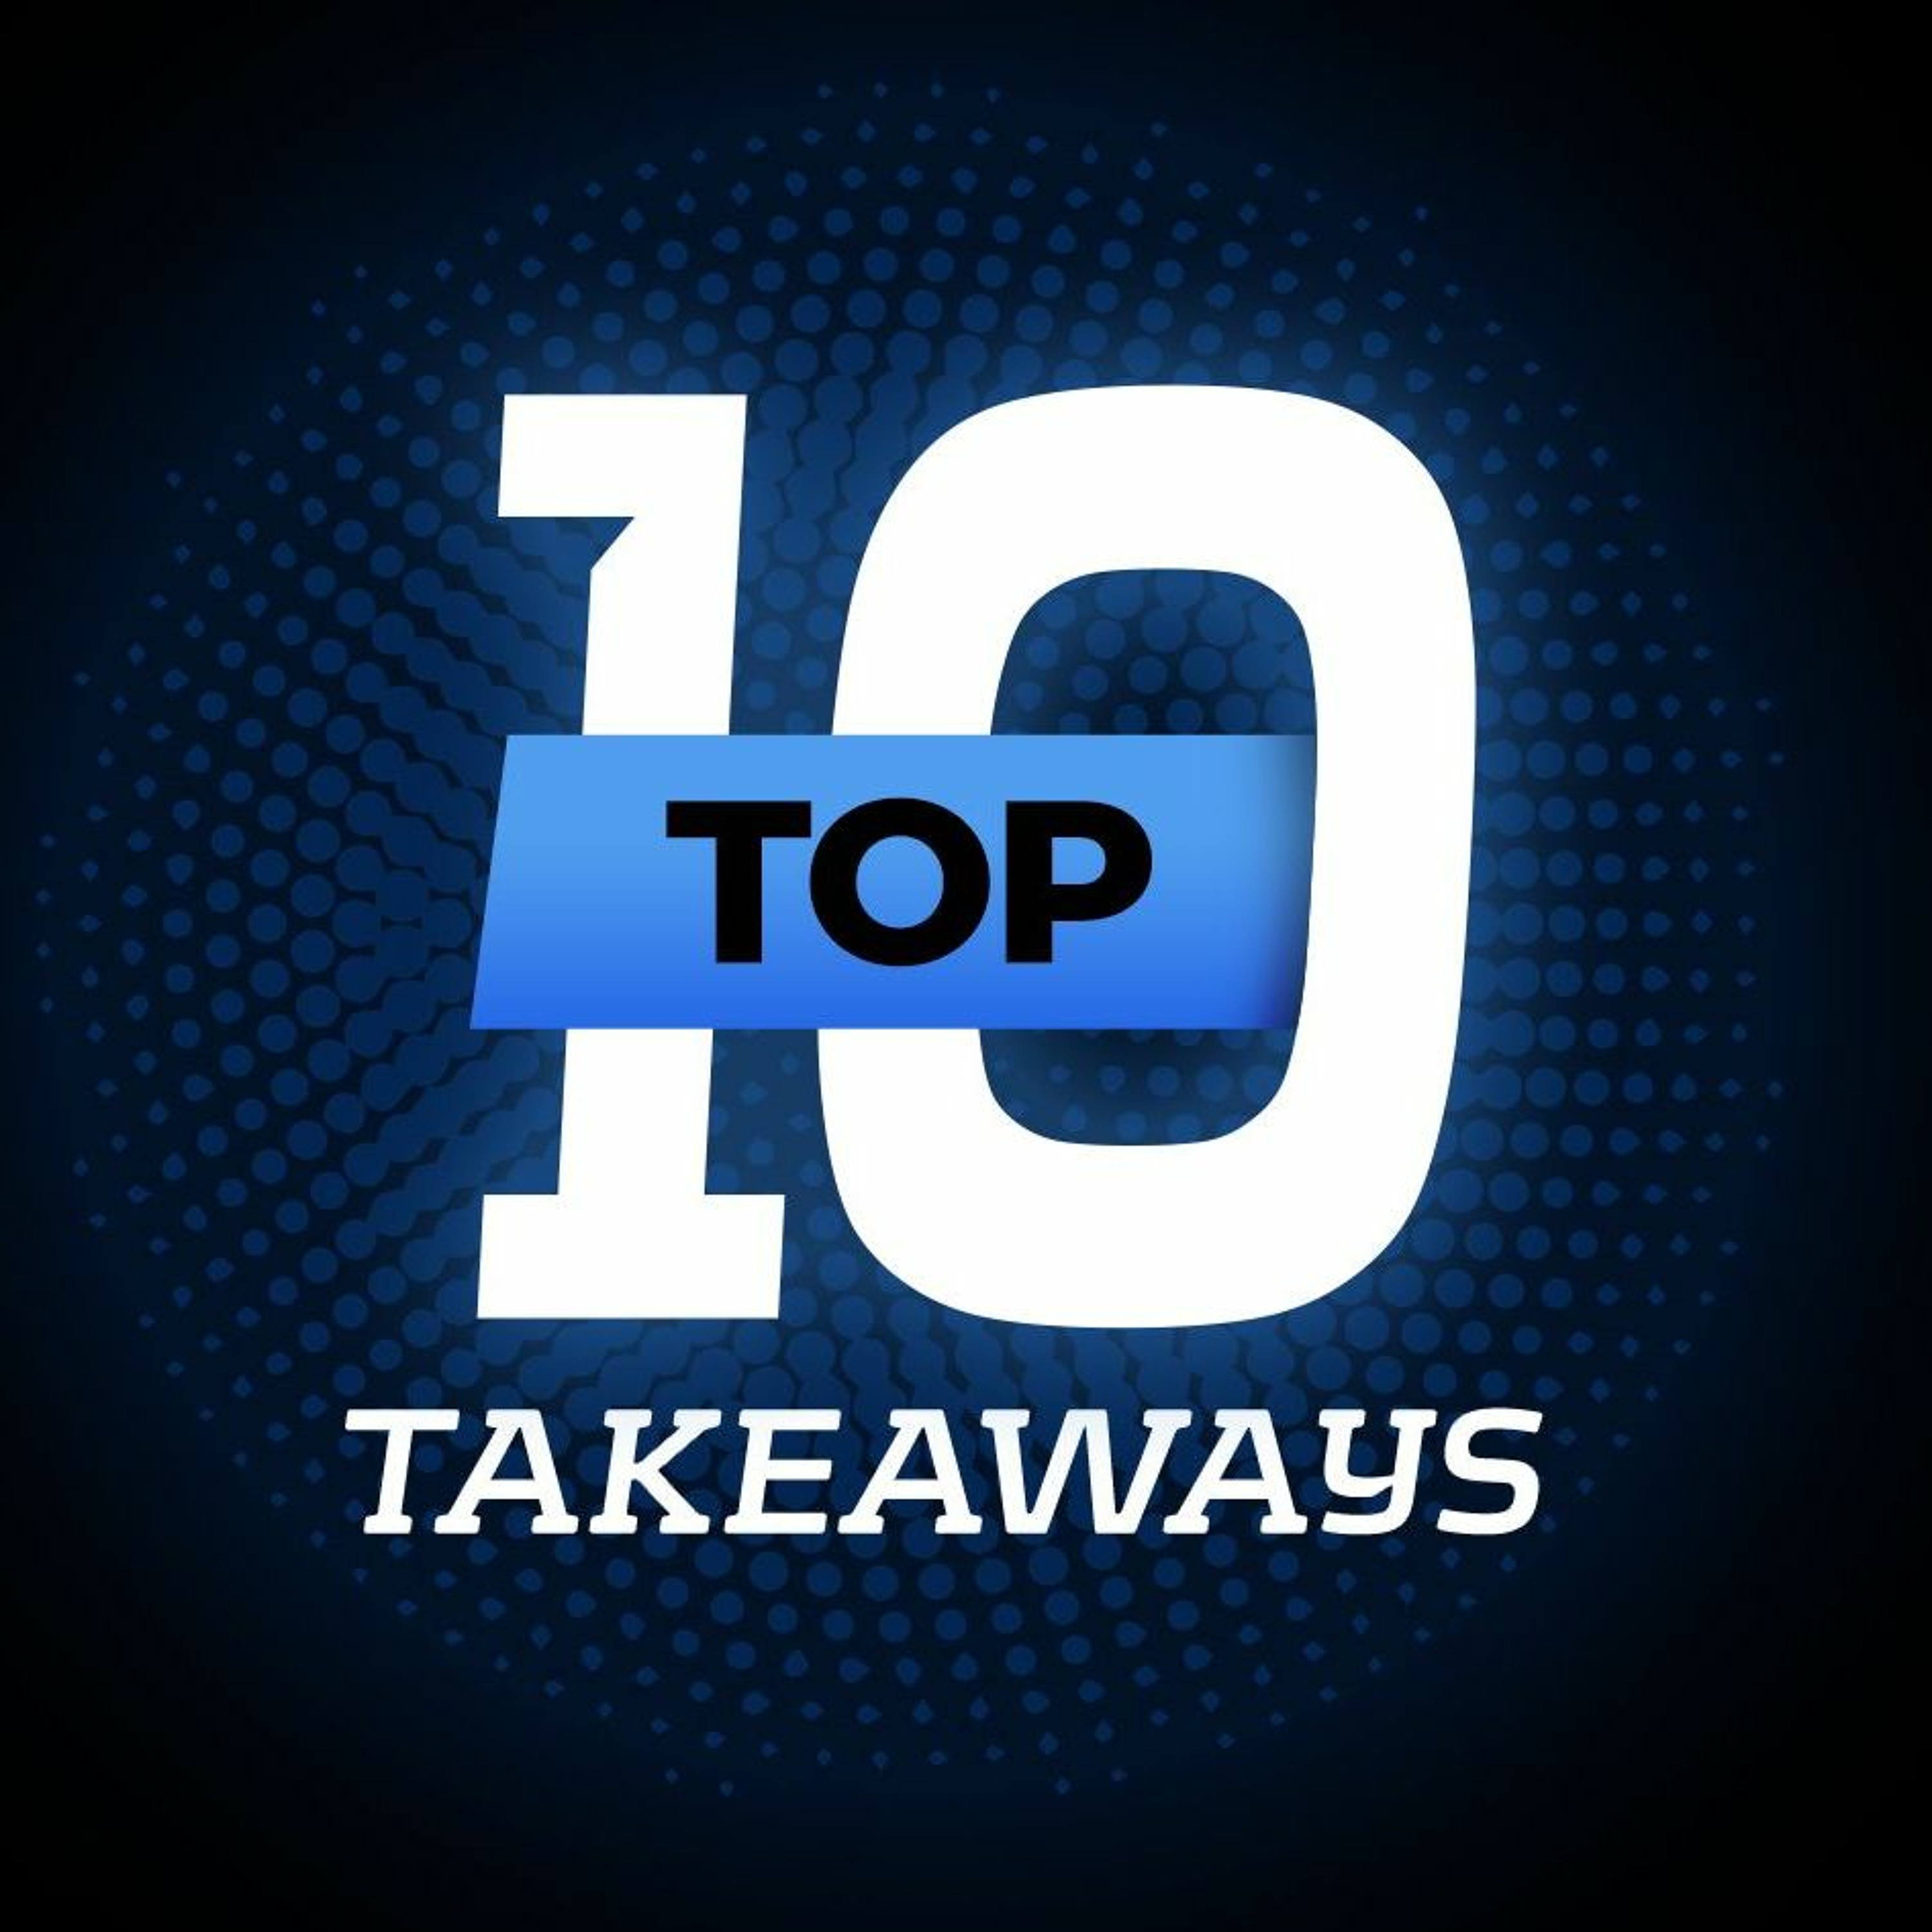 Tony Pollard is everything - Top 10 Takeaways